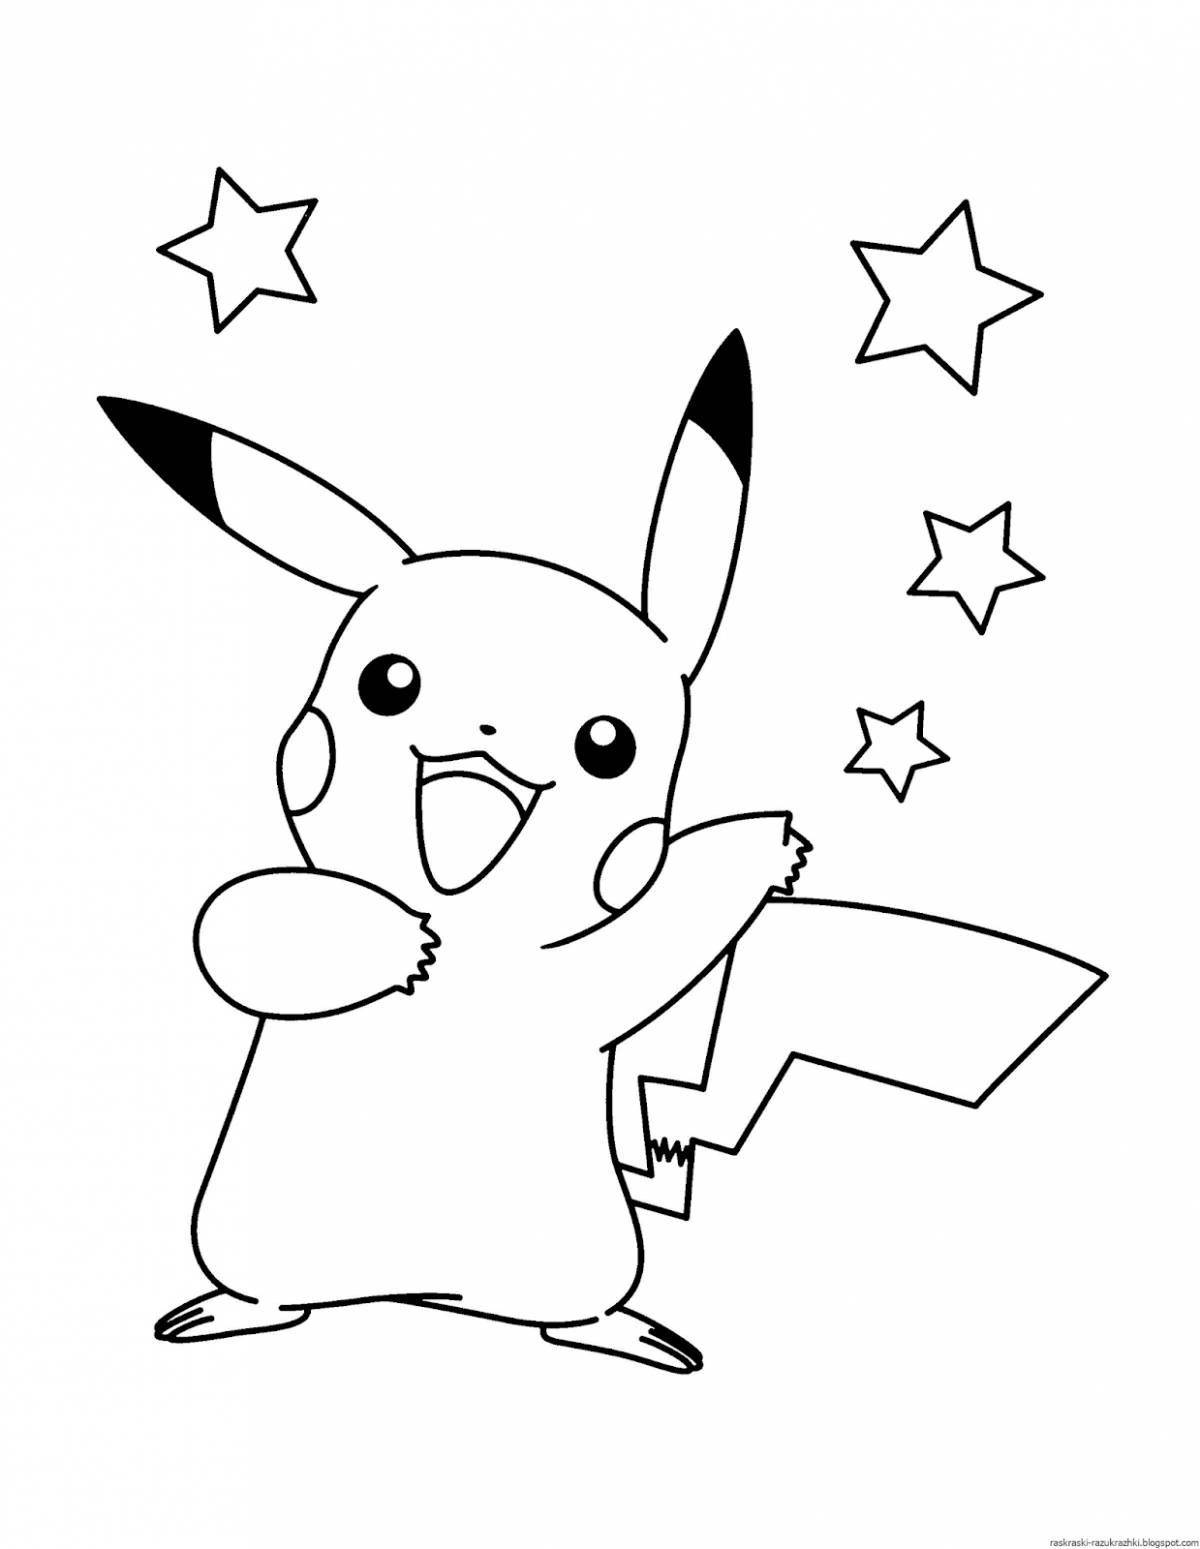 Adorable pikachu Christmas coloring book